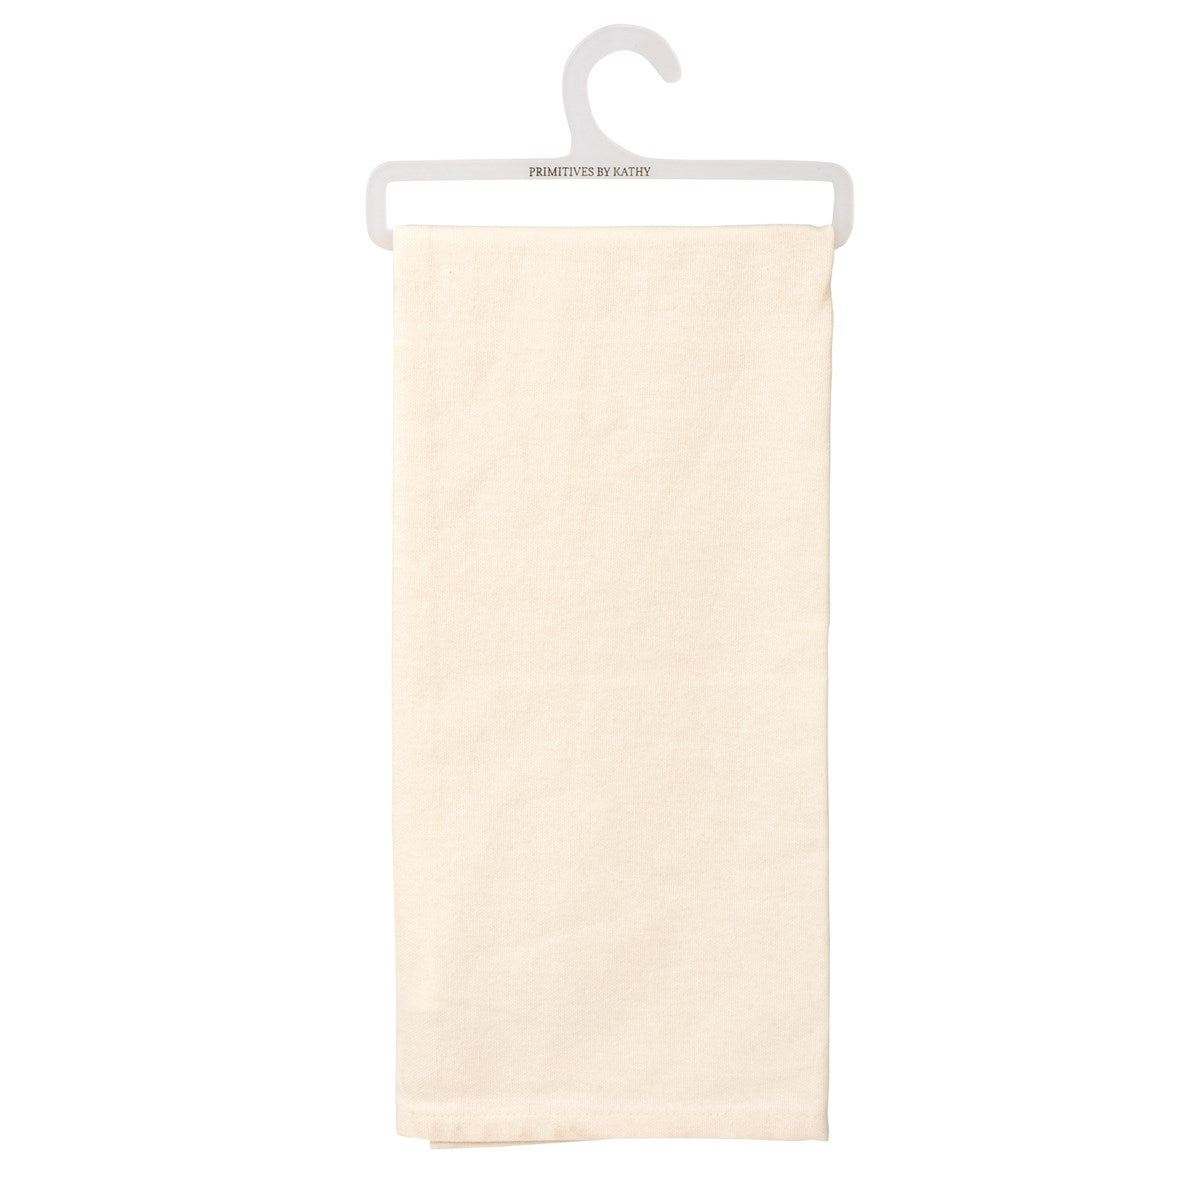 Mom Tea Towel | Primitives by Kathy